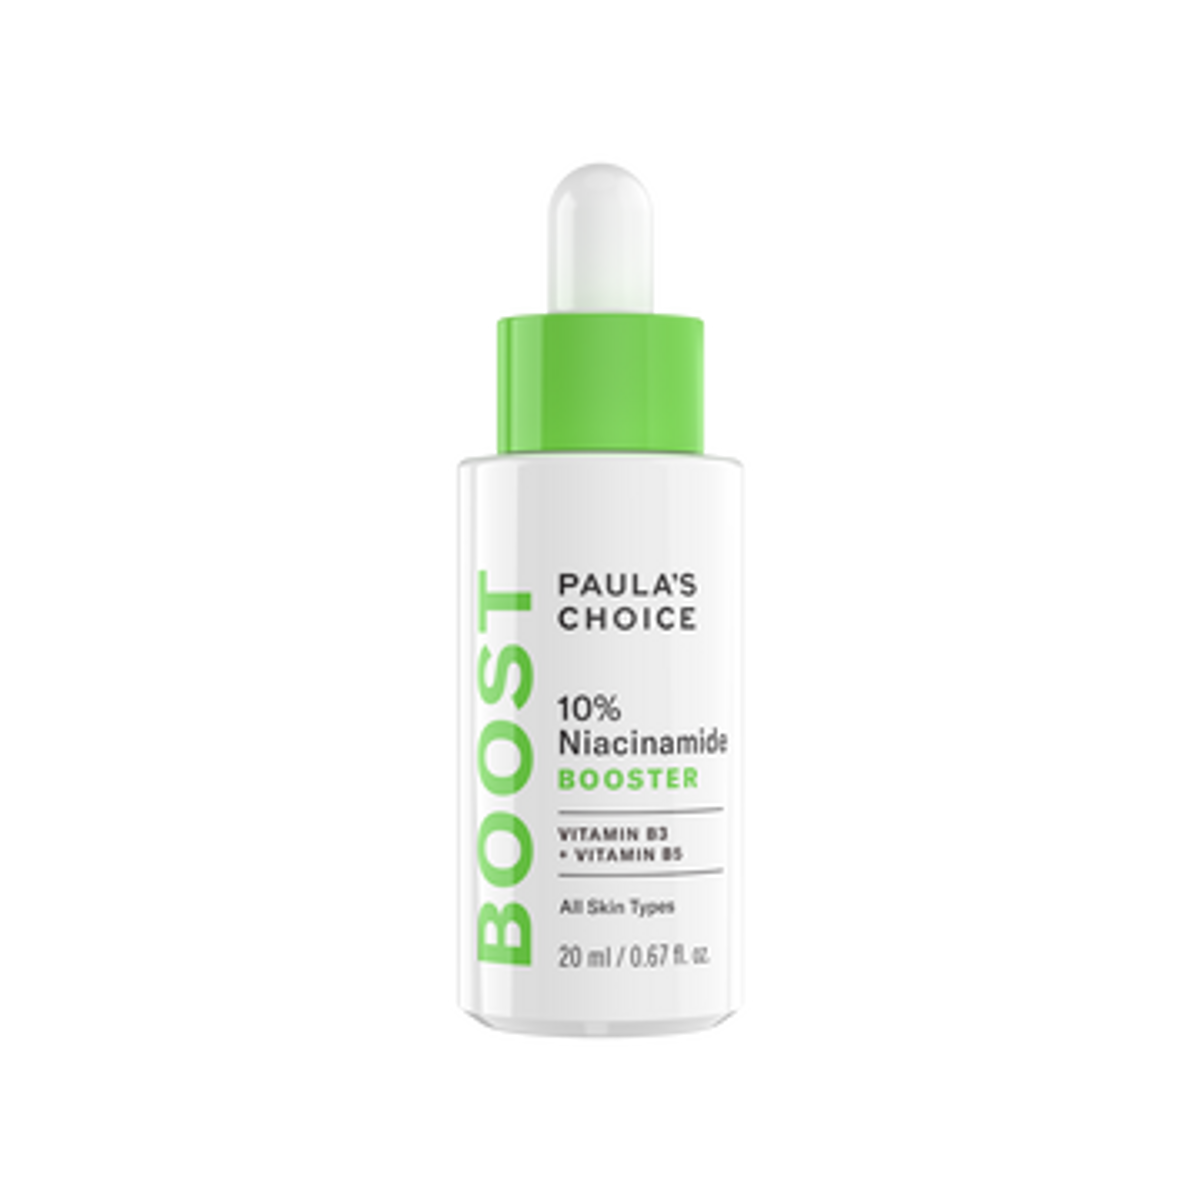 paulas choice skincare10 percent niacinamide booster